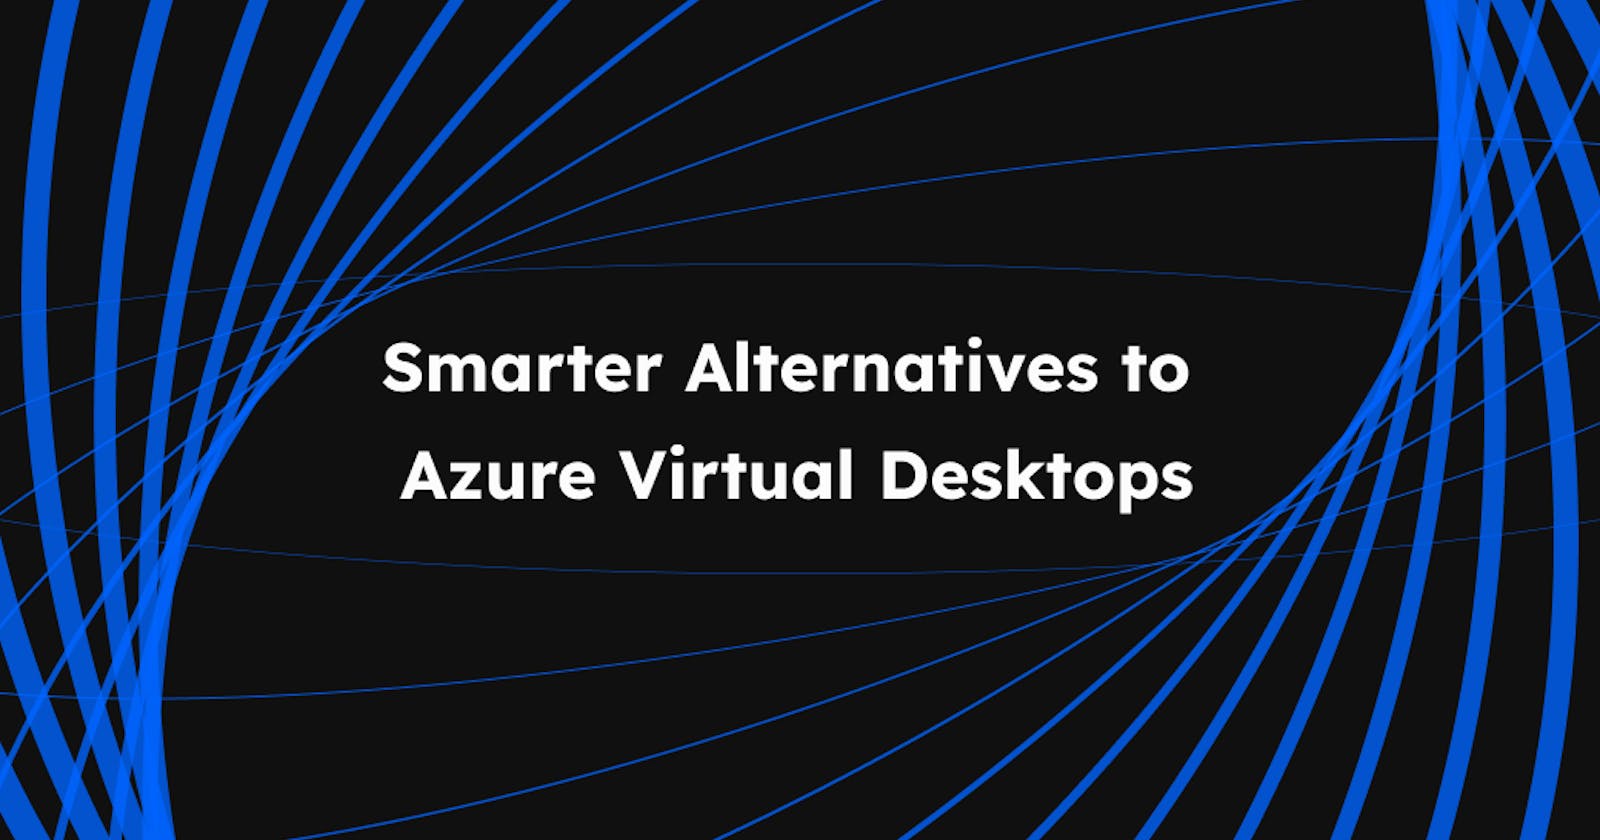 #1 Alternative to Azure Virtual Desktops